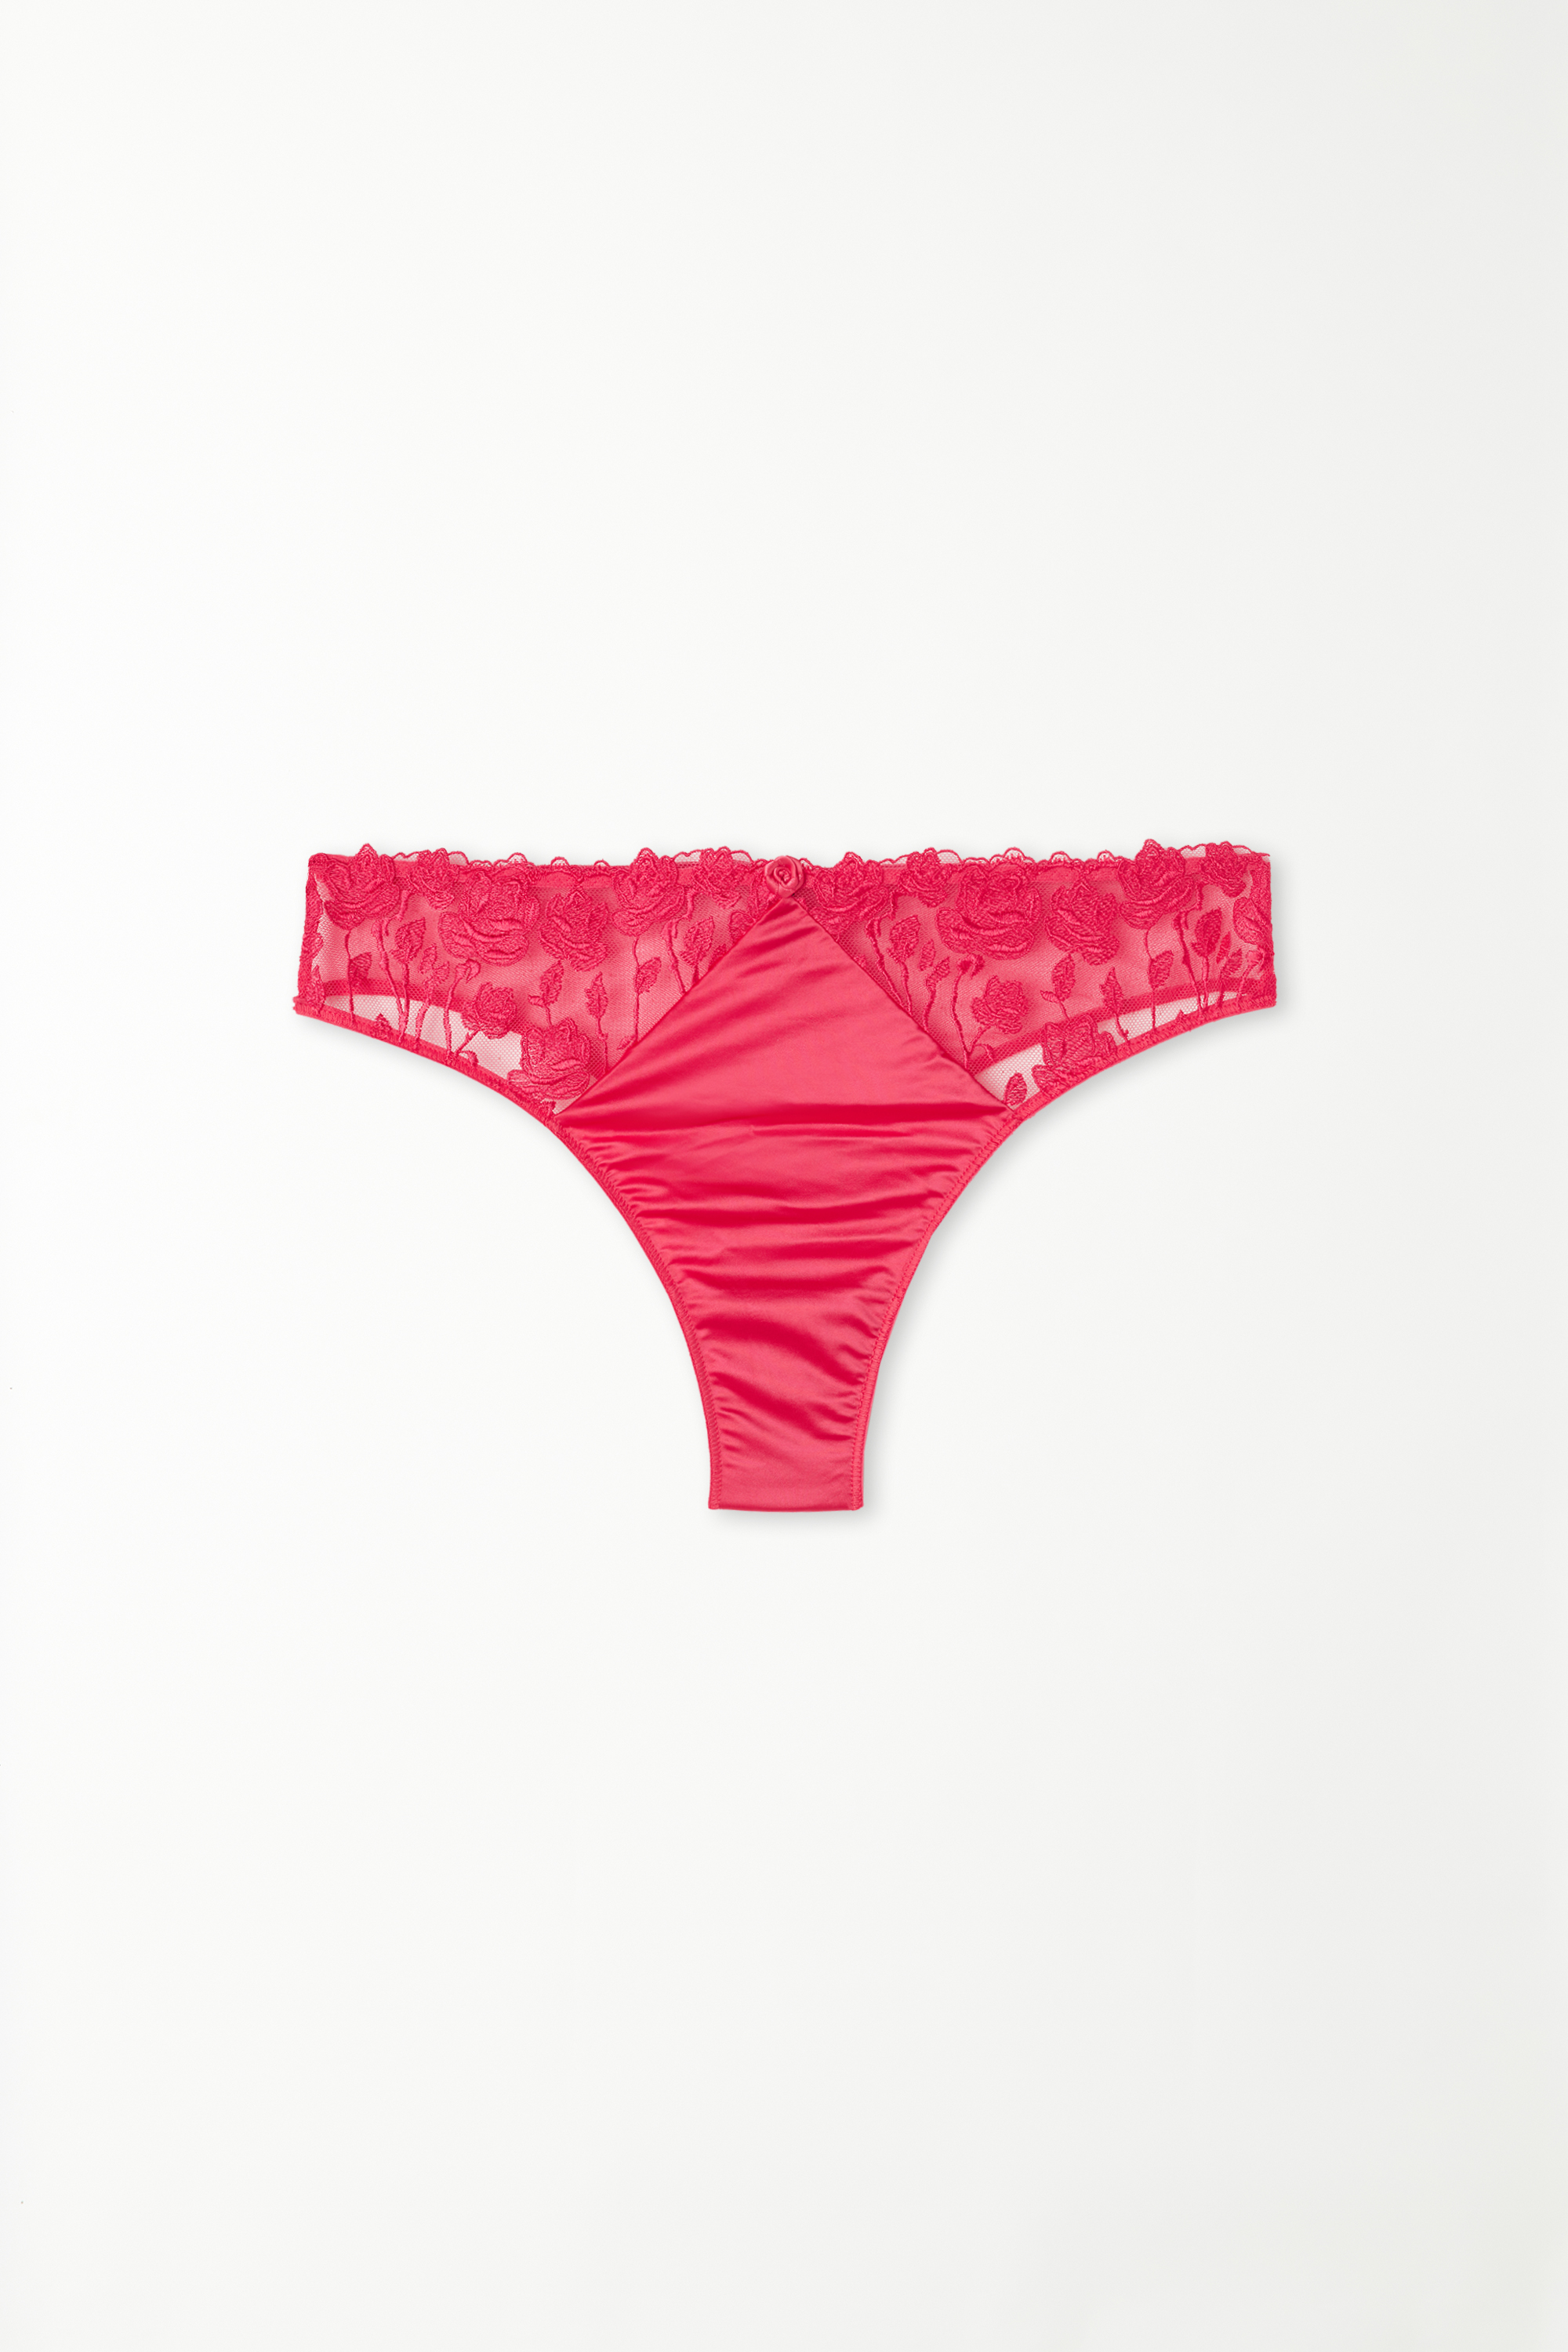 Red Passion Lace Brazilian Panties